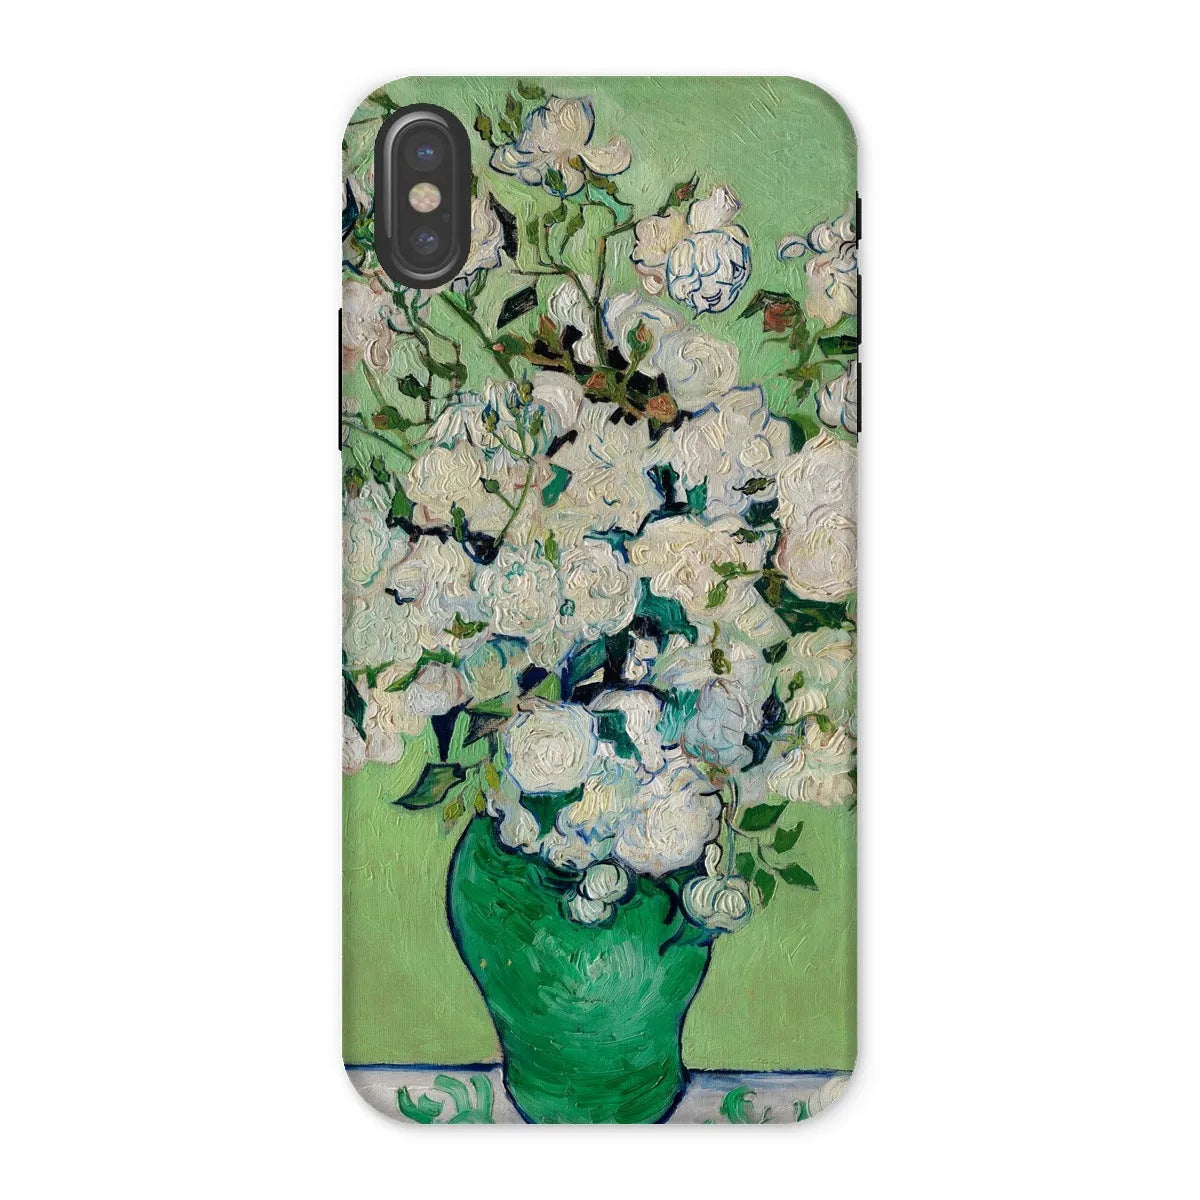 Roses - Post-impressionist Phone Case - Vincent Van Gogh - Iphone x / Matte - Mobile Phone Cases - Aesthetic Art